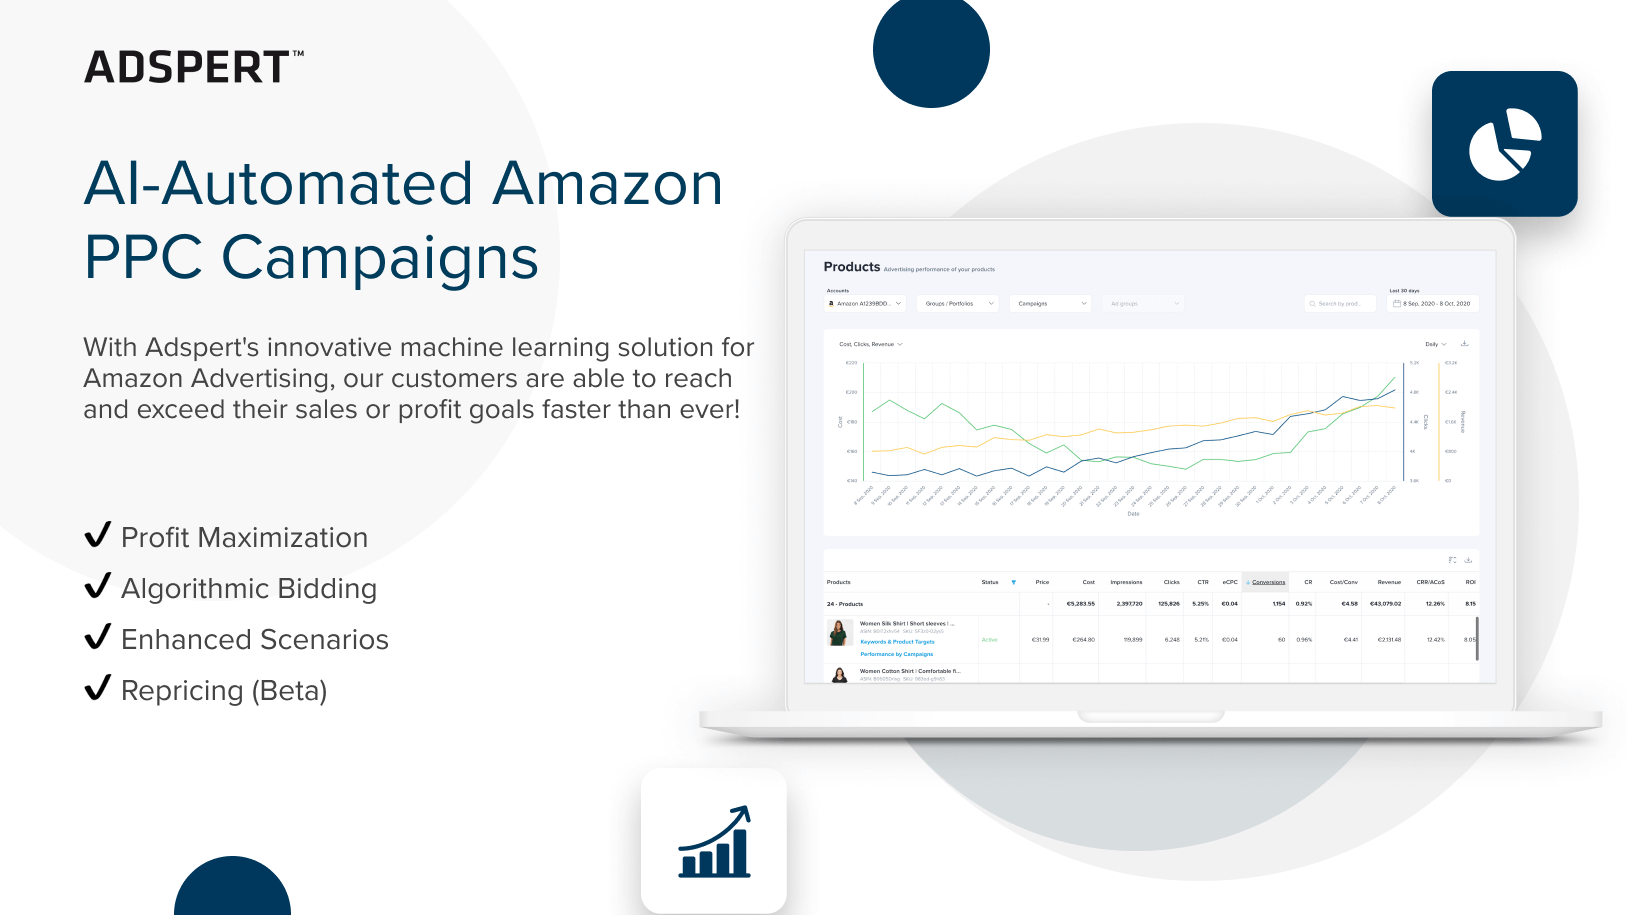 Maximize your profit, optimize bids, improve keyword management with Adspert's AI-powered Amazon Ads Software, Google Ad Optimization Tool